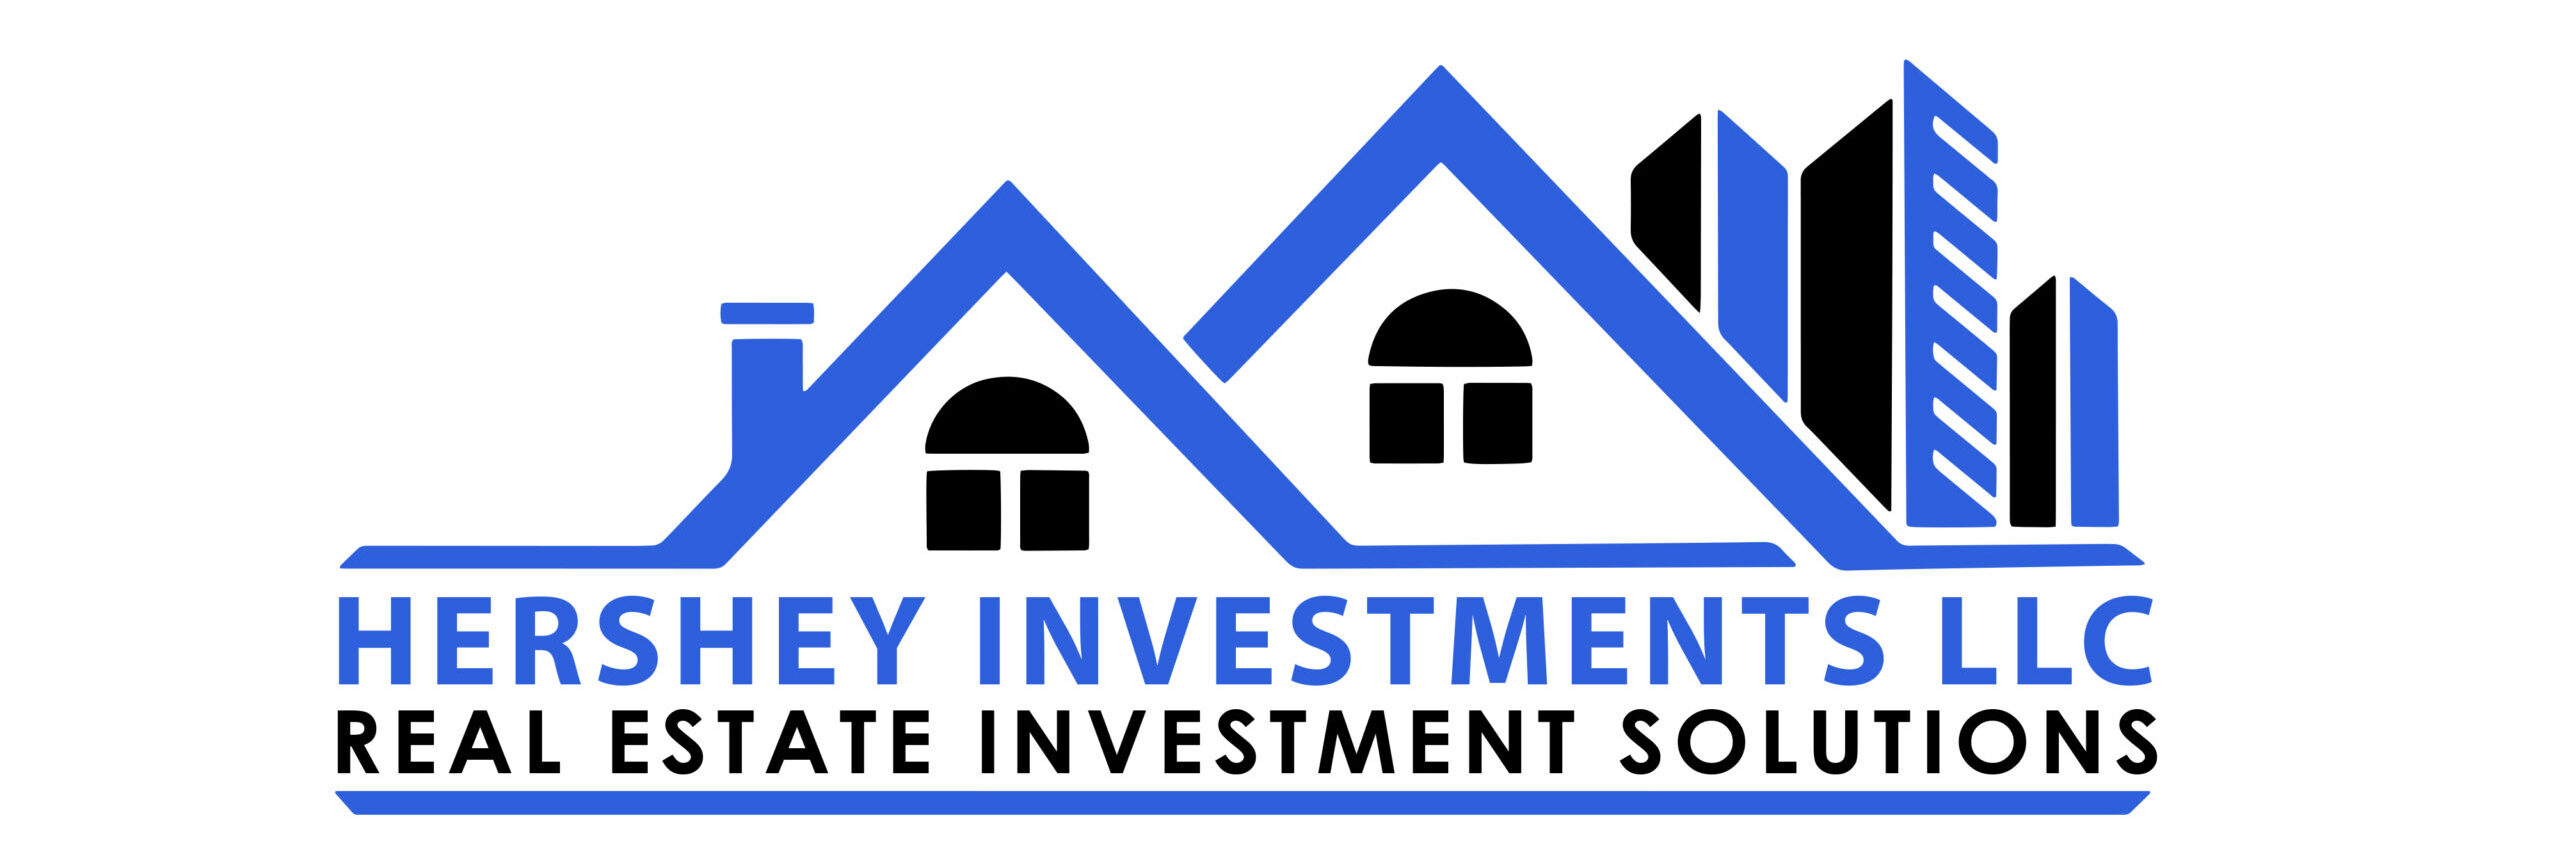 Hershey Investments LLC